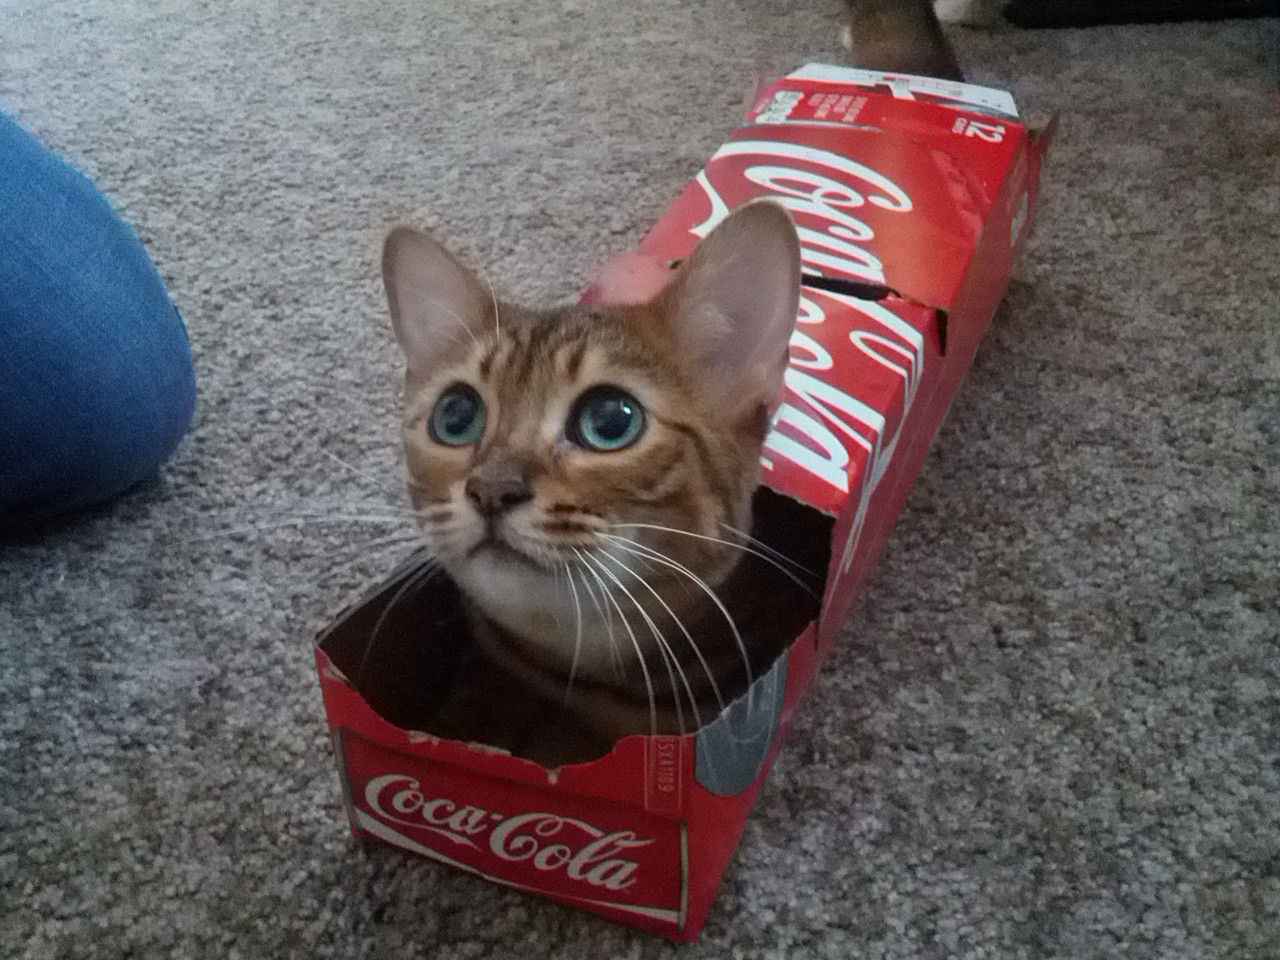 Why-Did-You-Disturb-Cat-In-Its-Brand-New-Coke-Box.jpg